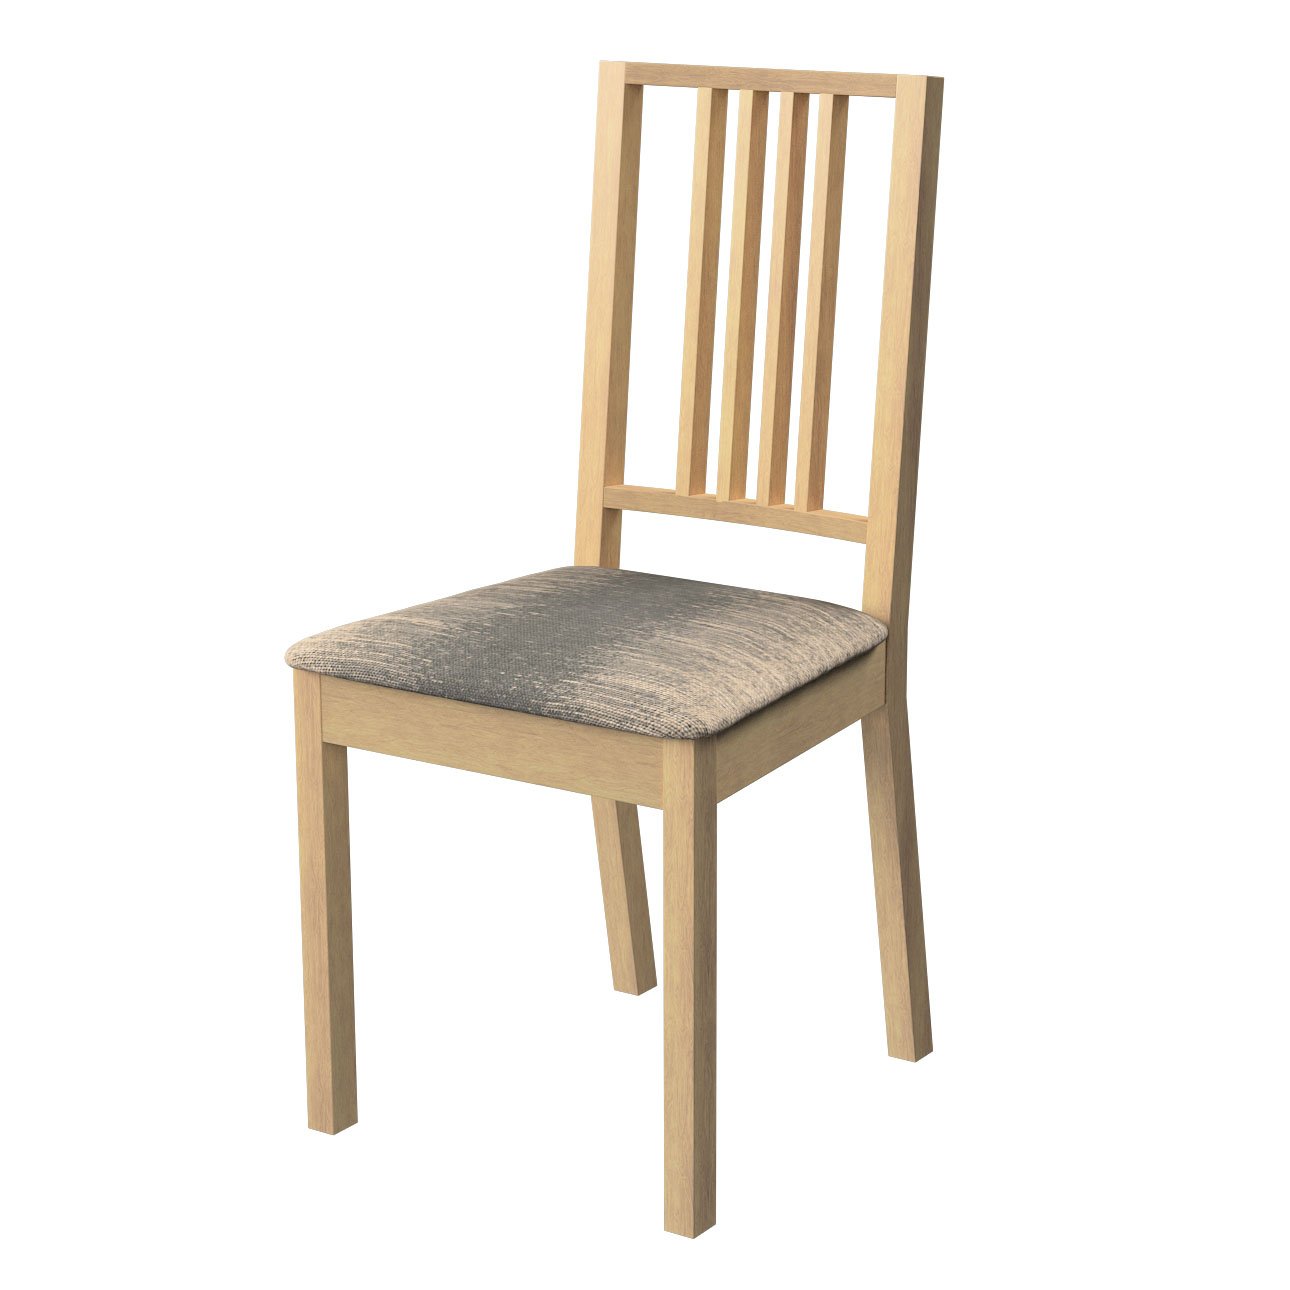 Dekoria Potah na sedák židle Börje, šedobéžová, potah sedák židle Börje, Living, 106-57